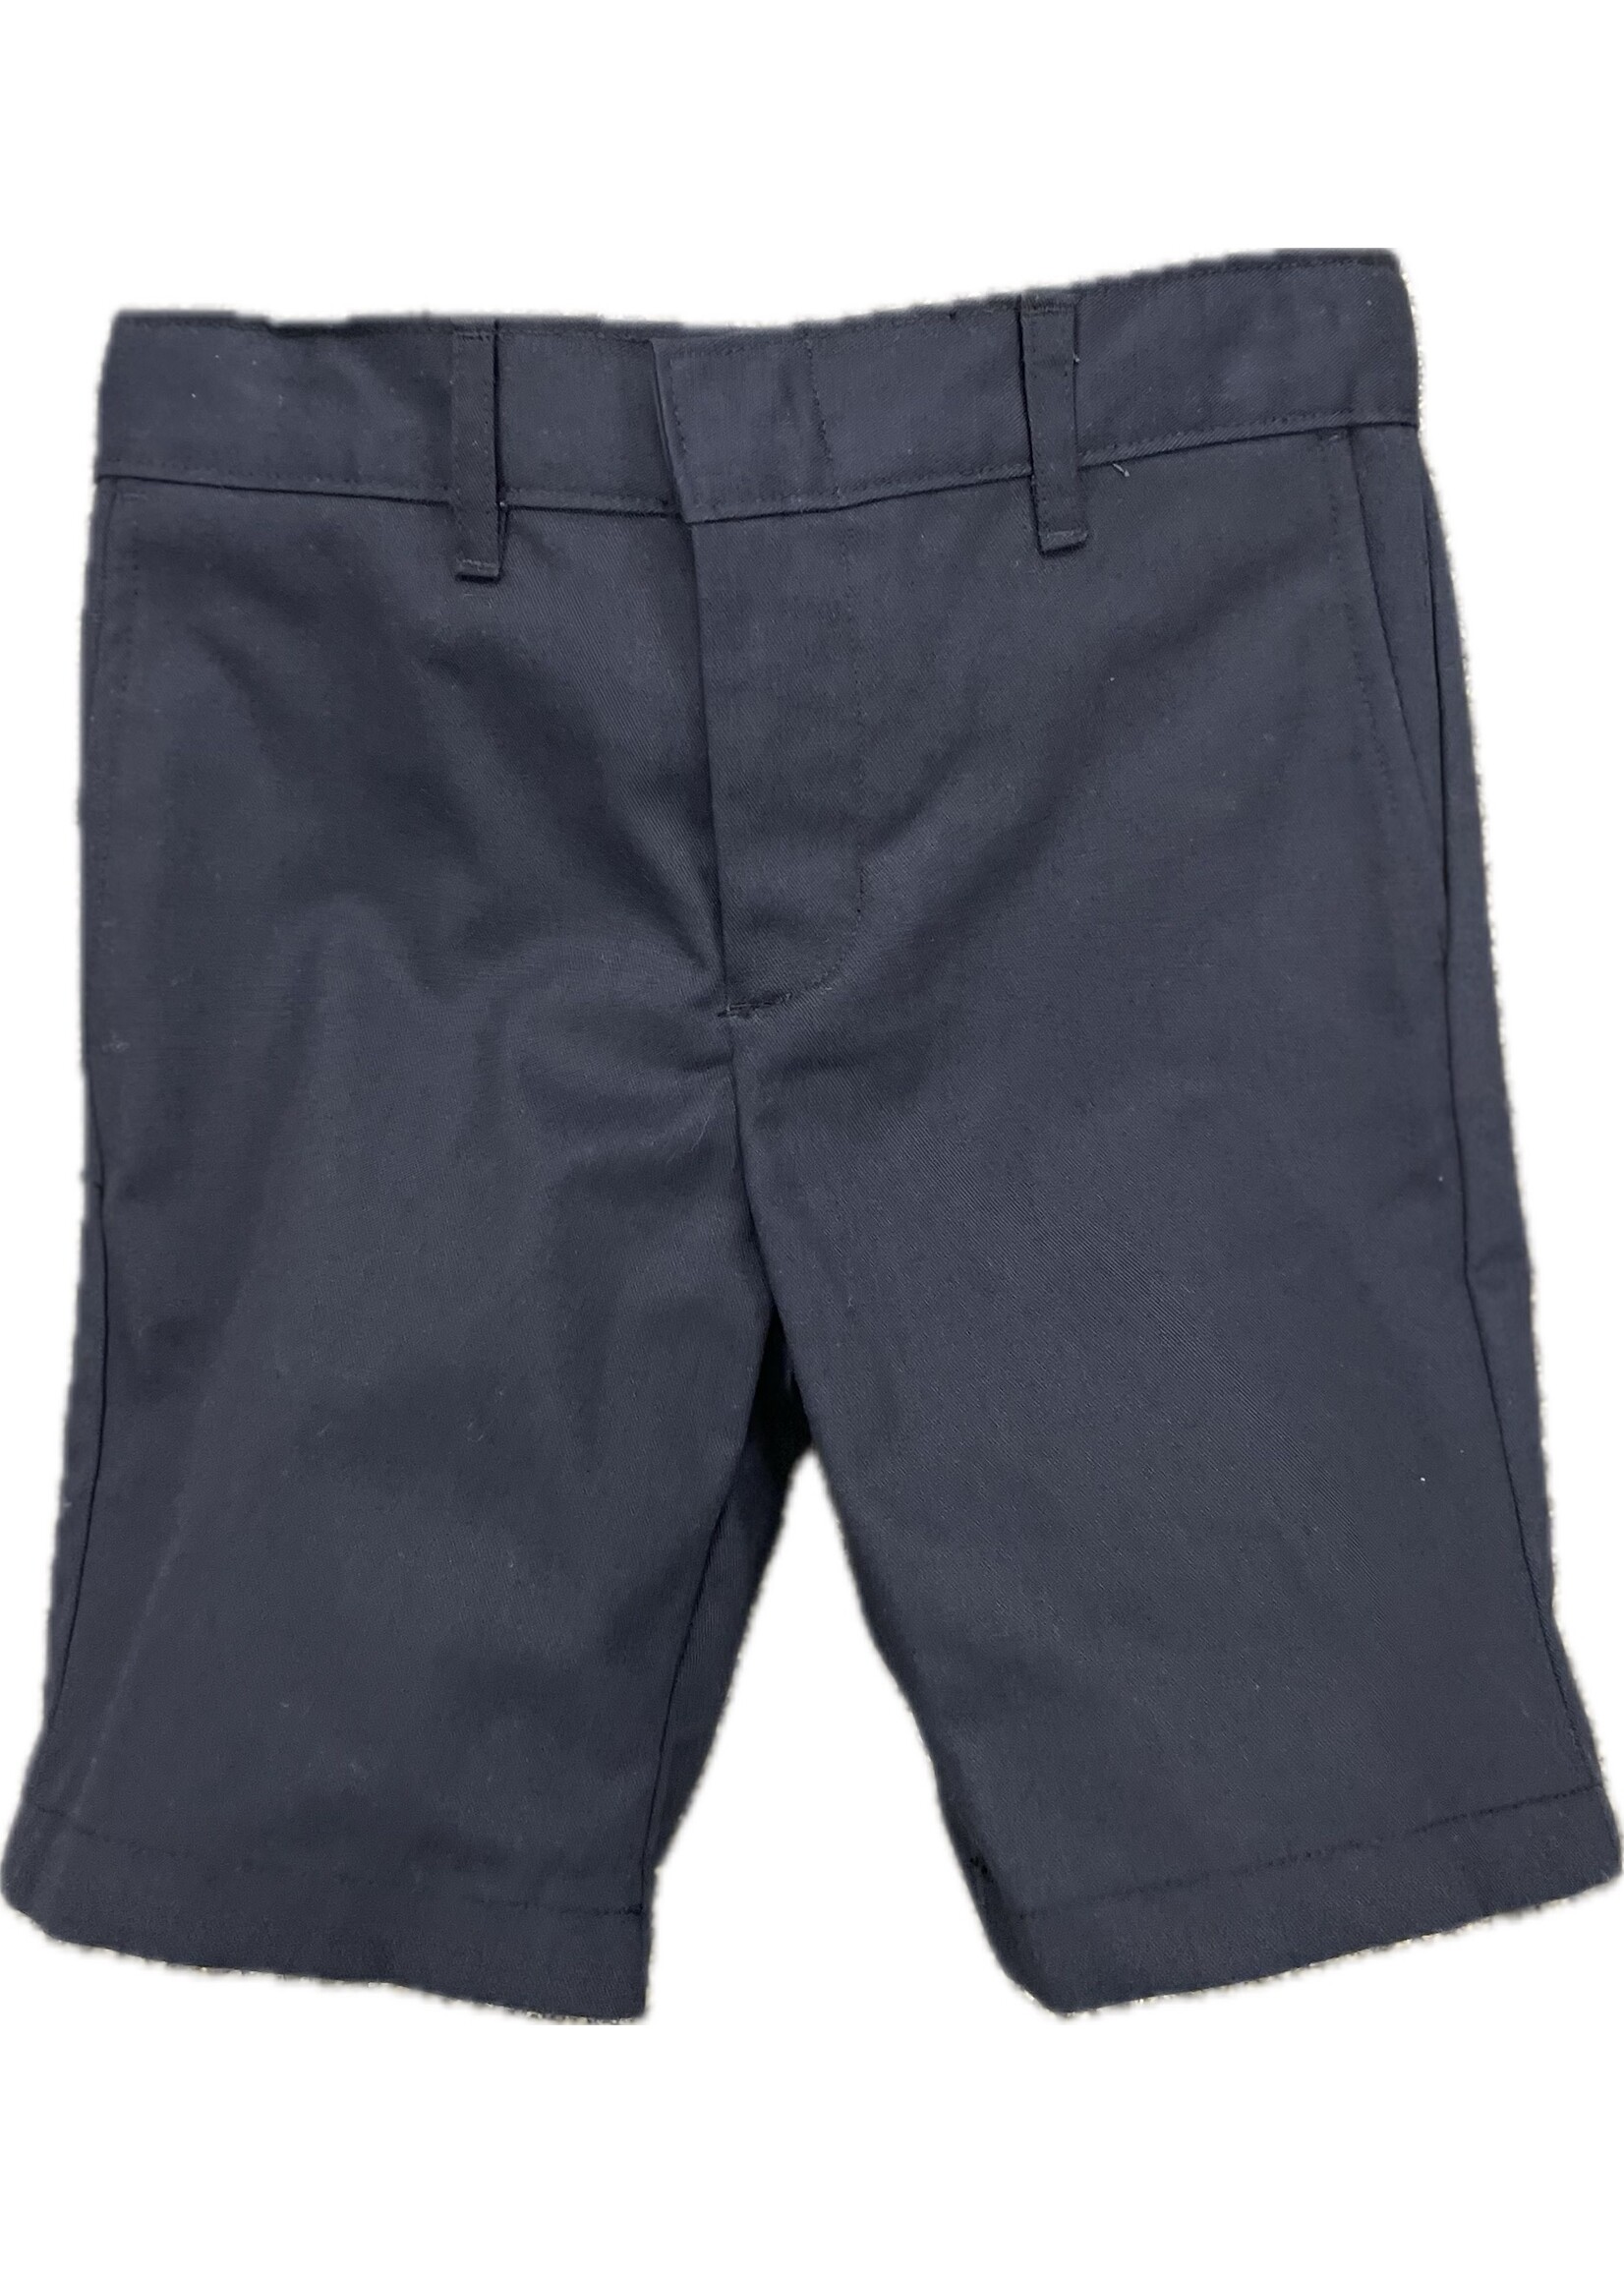 UNIFORM Boys Shorts, Navy